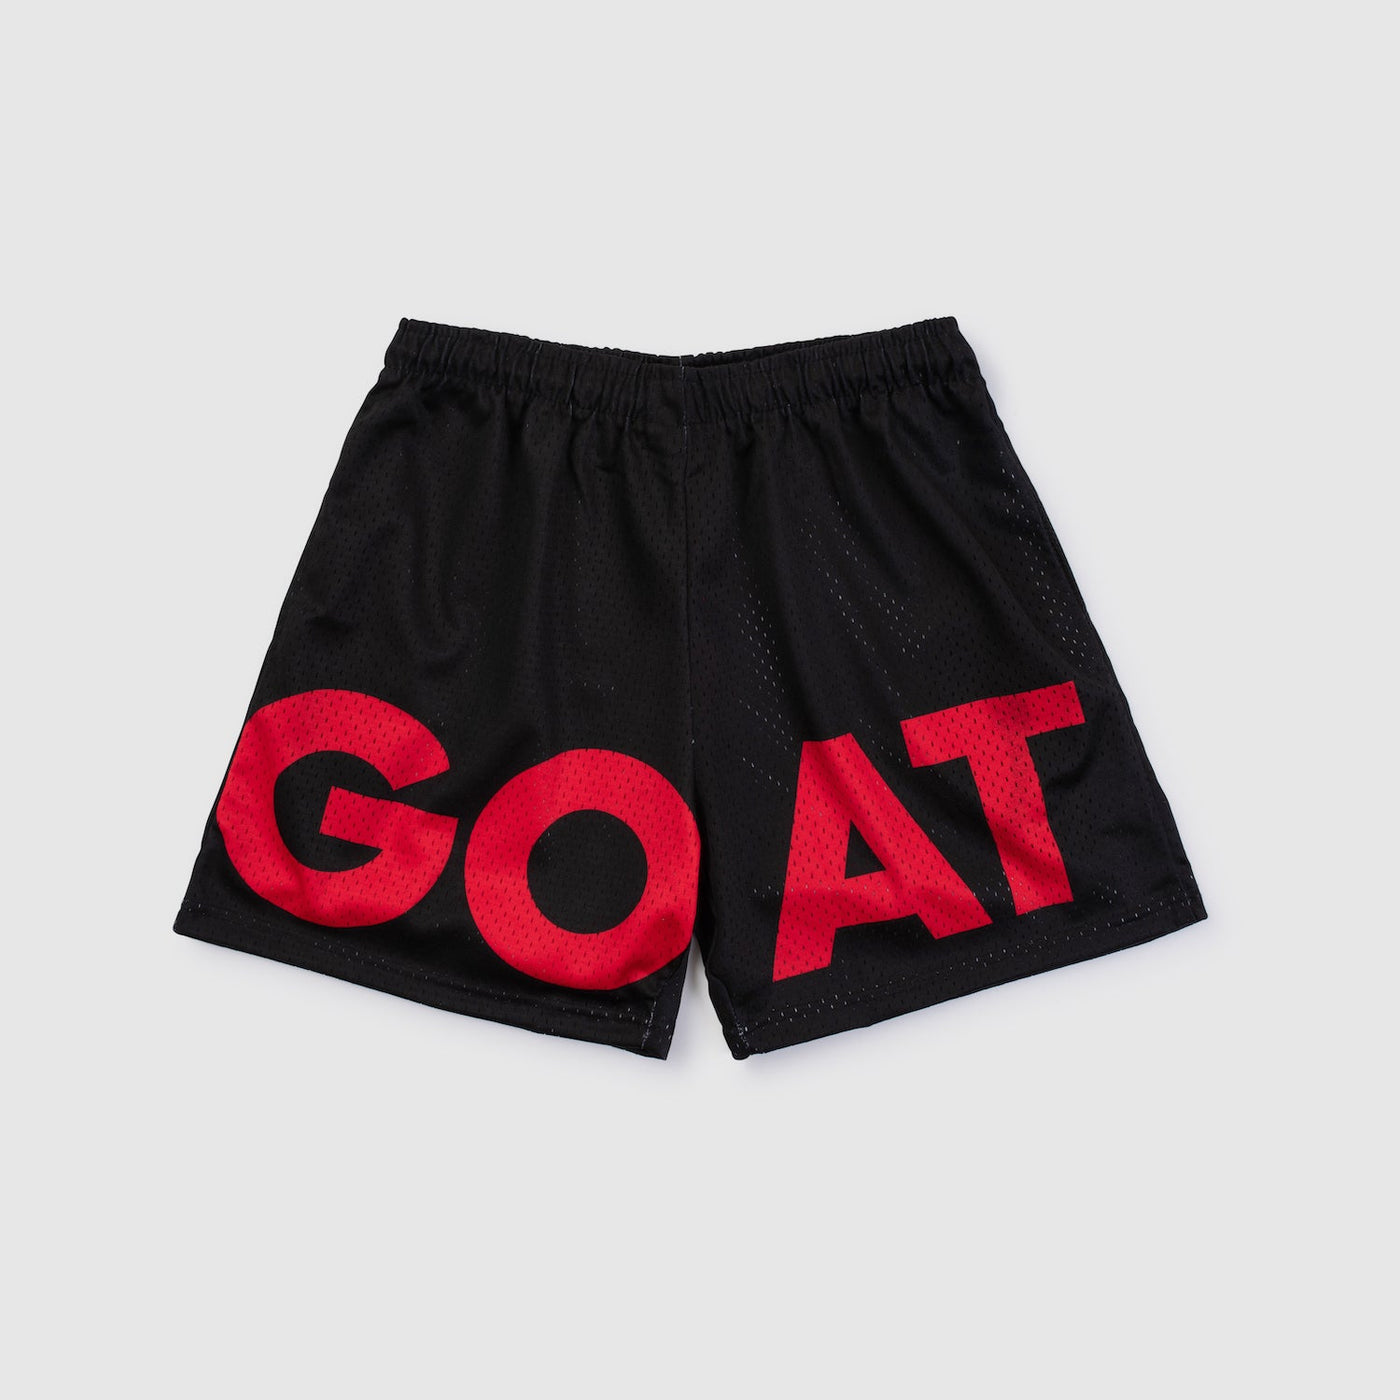 GOAT Mesh Logo Shorts (Black/Red)